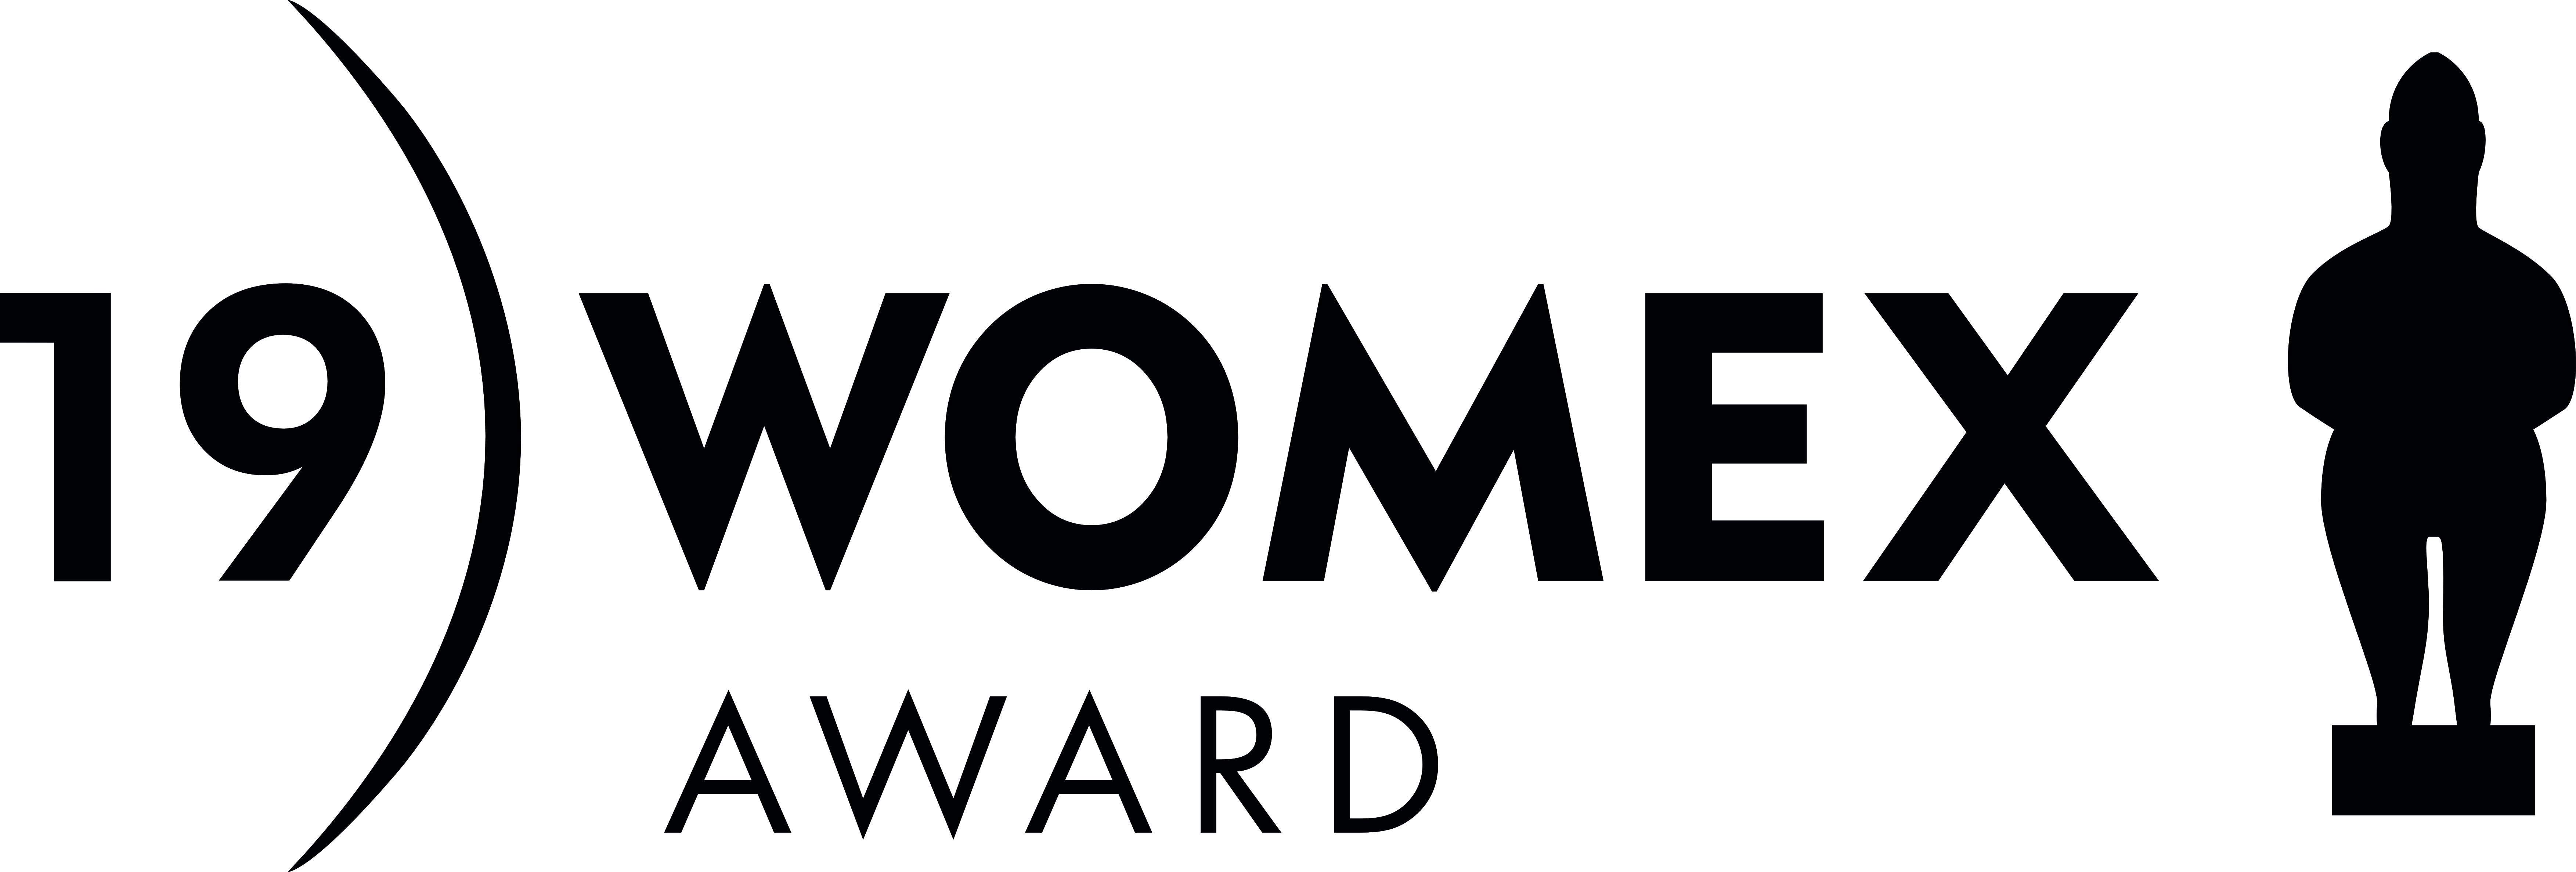 WOMEX 19 Award